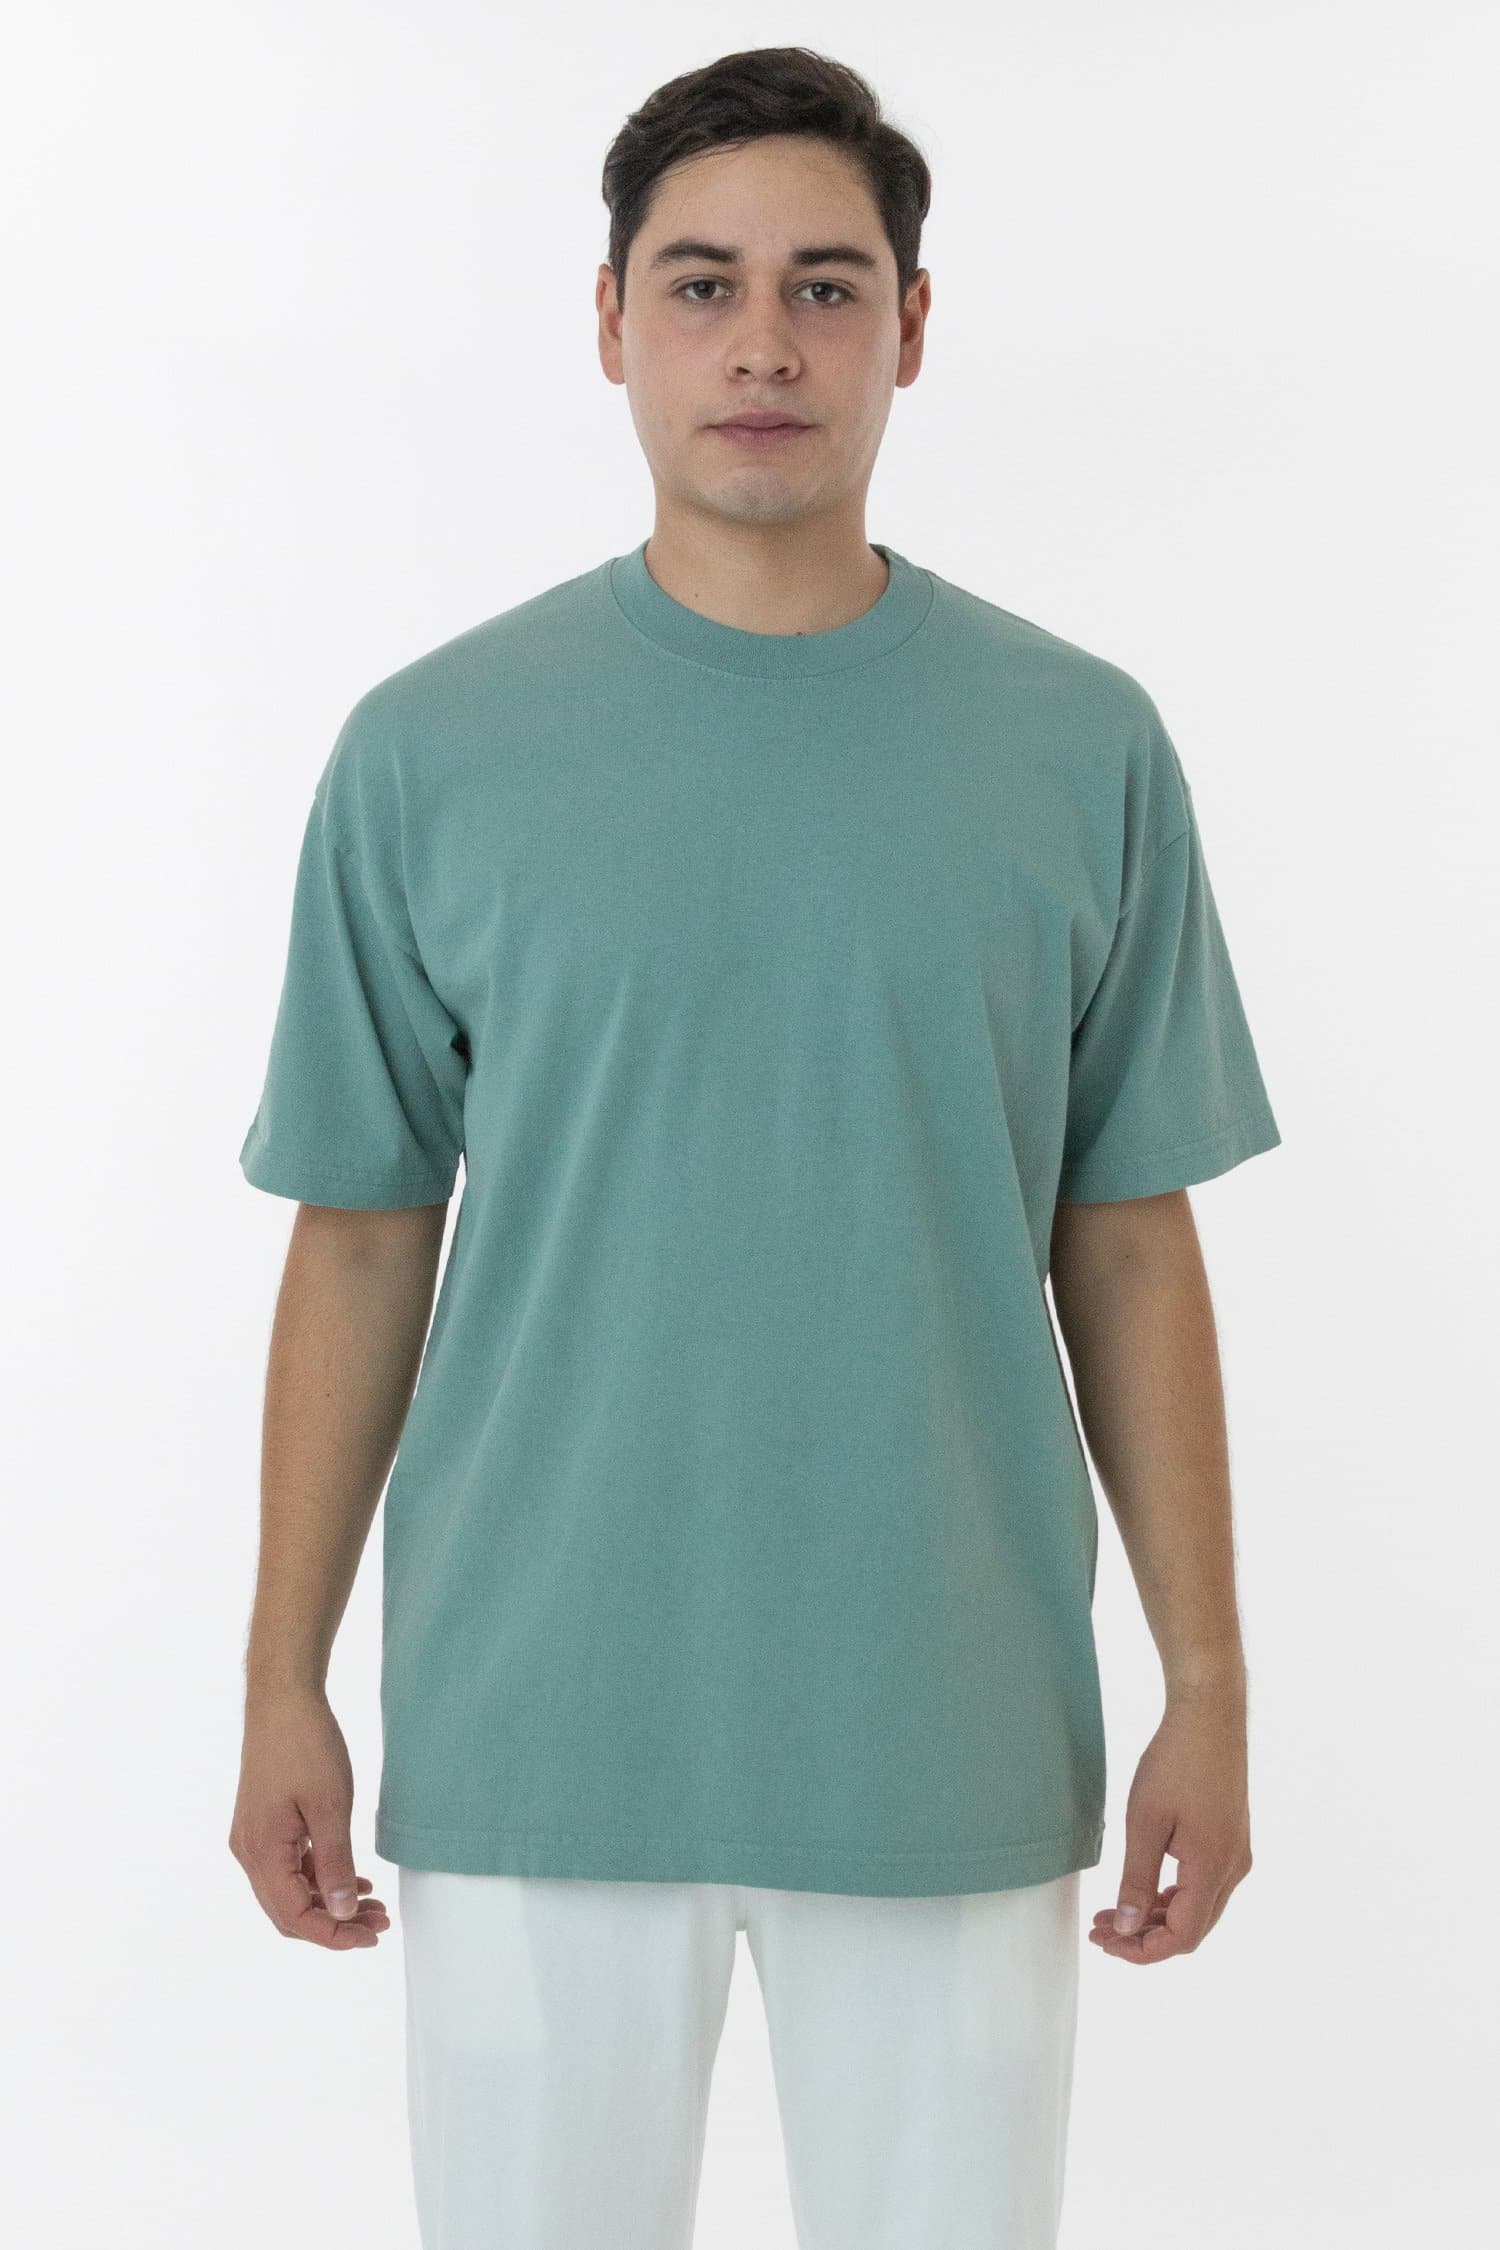 6.5 Oz. Garment Dye Crewneck T-Shirt - New Colors